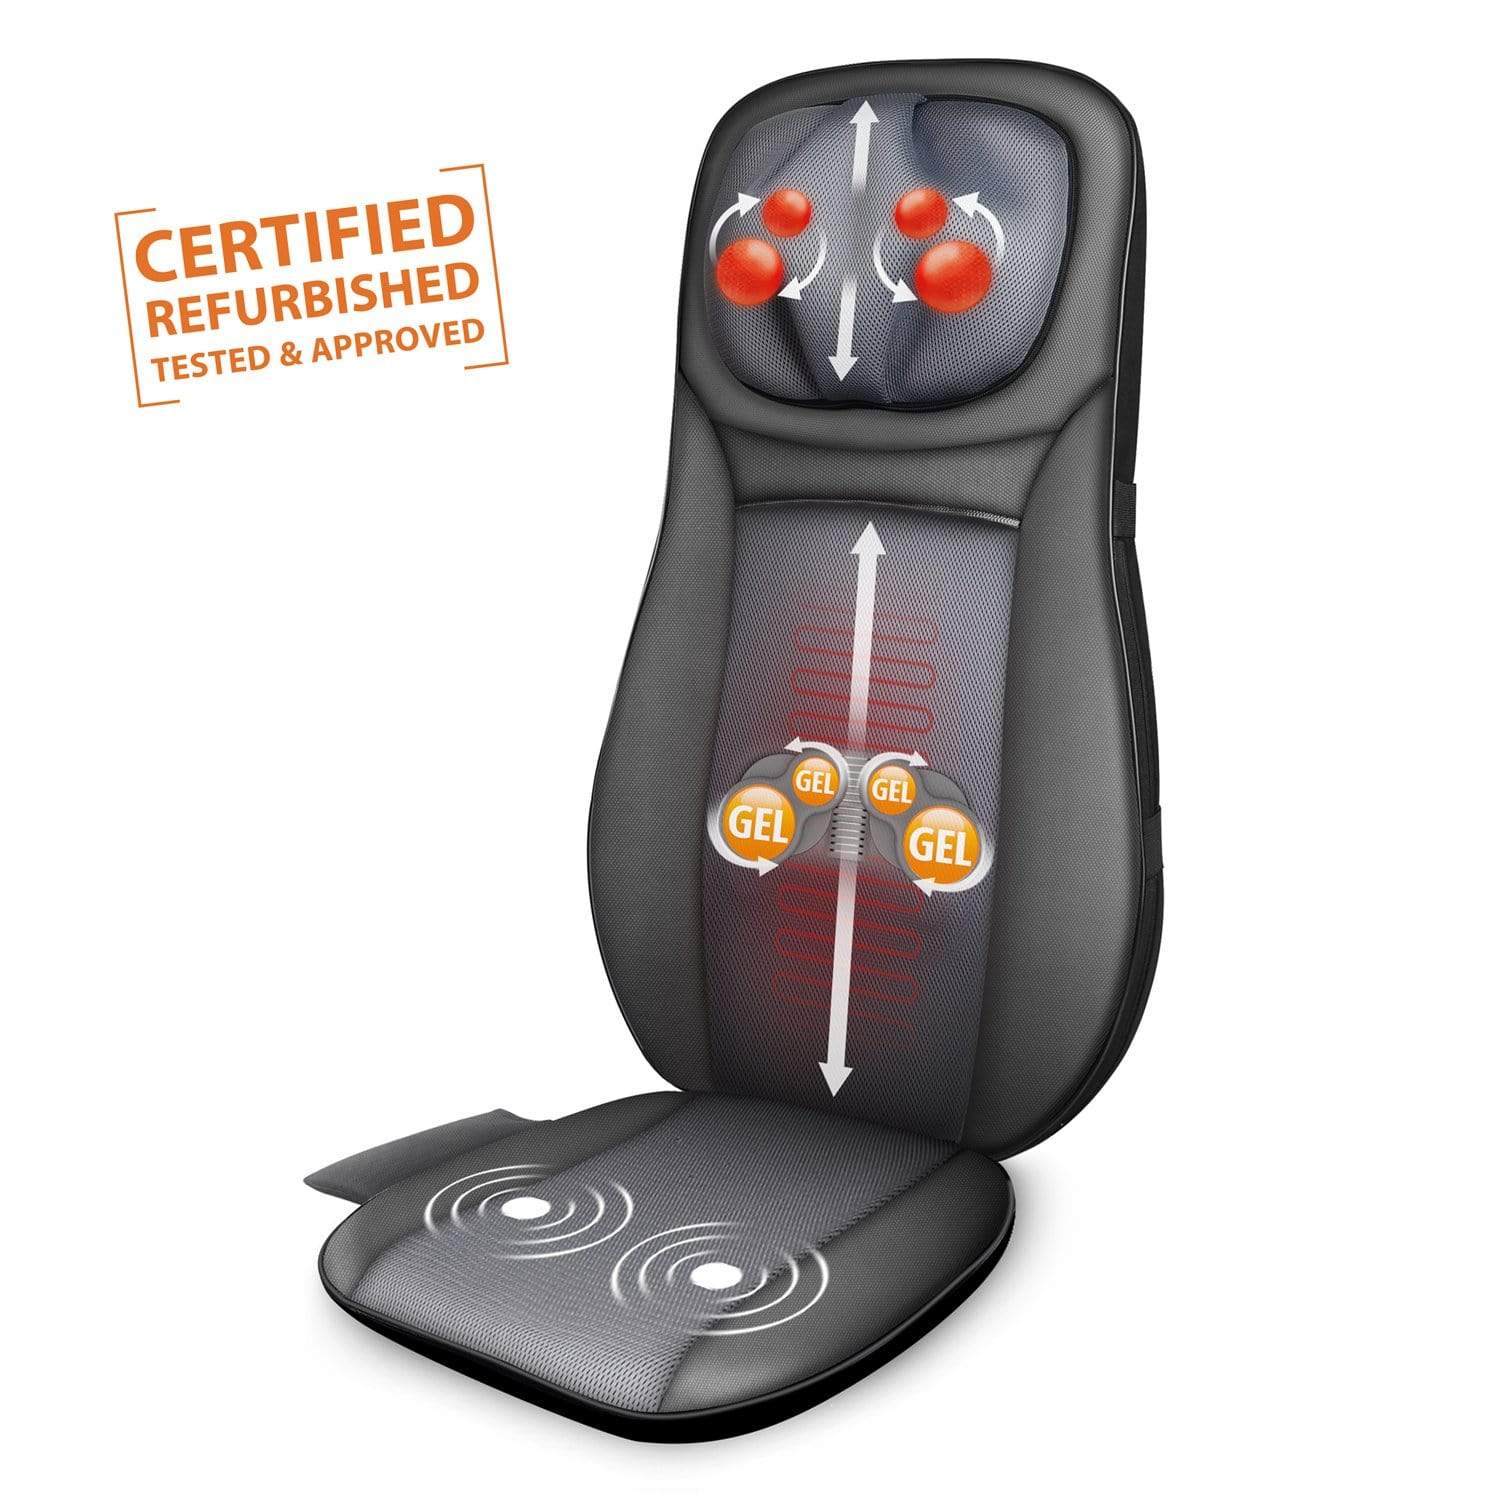 Certified Refurbished - Vibration Massage Seat Cushion with Heat - 262P